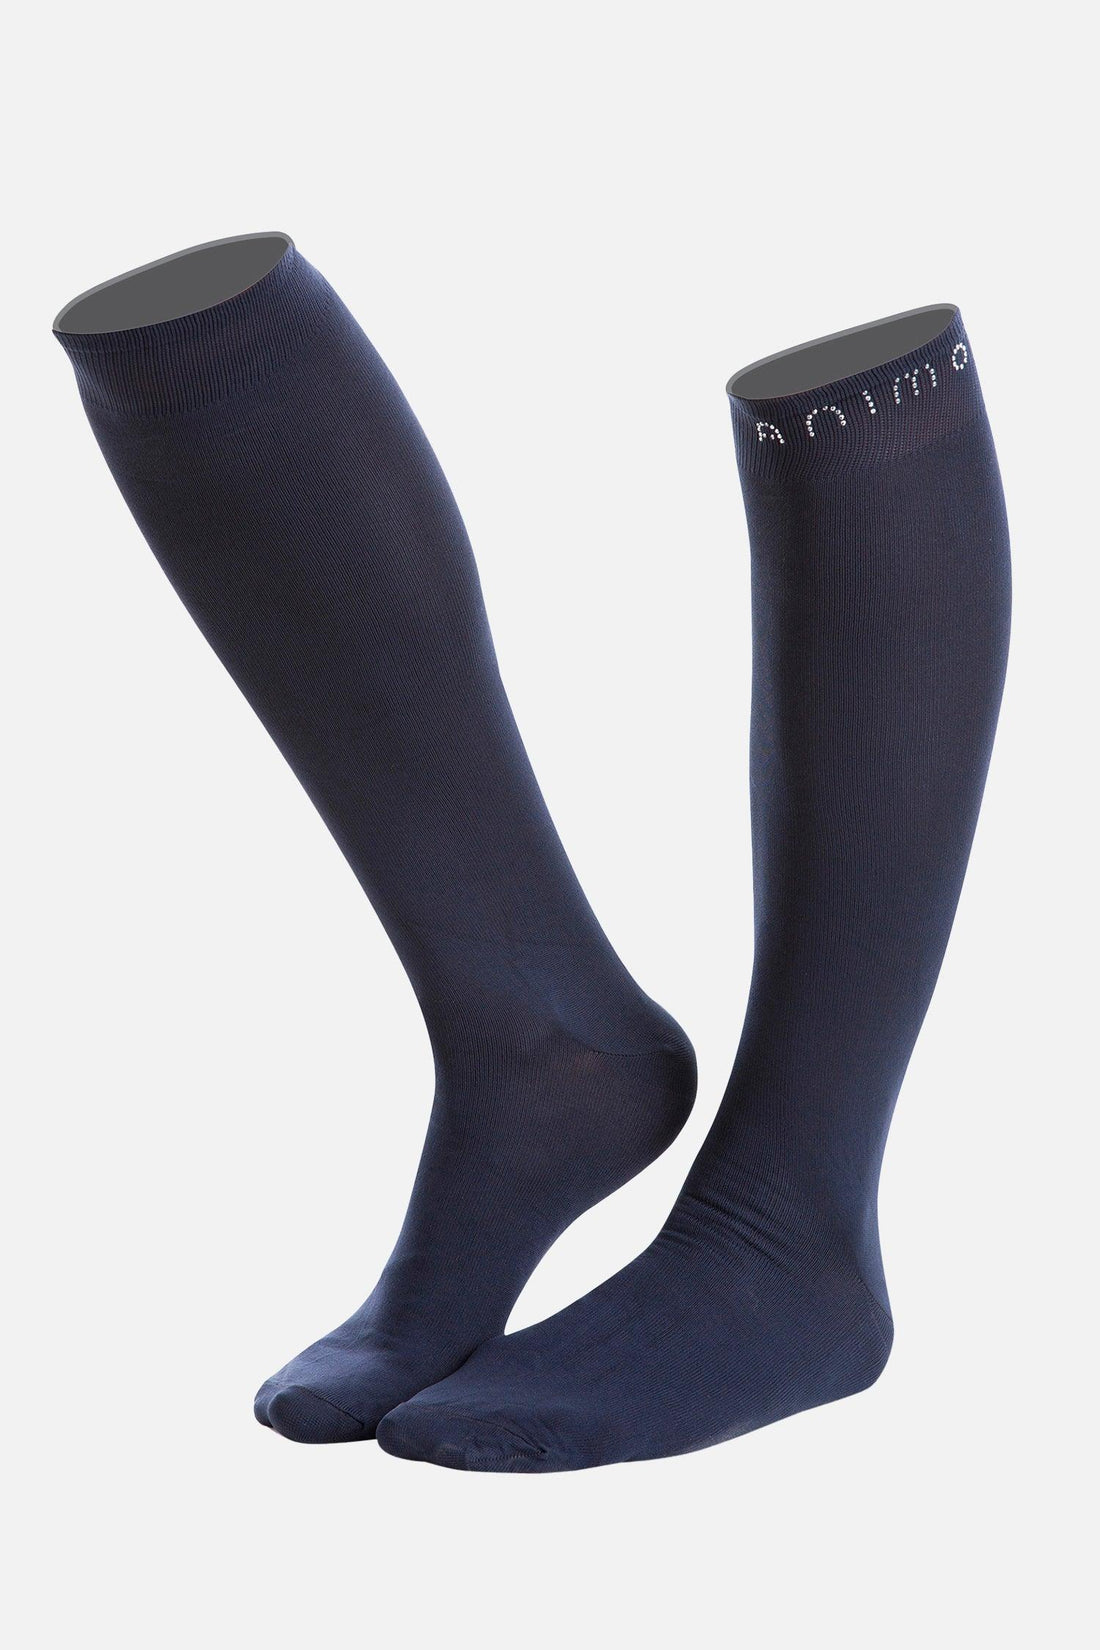 Animo taipei socks for women - HorseworldEU